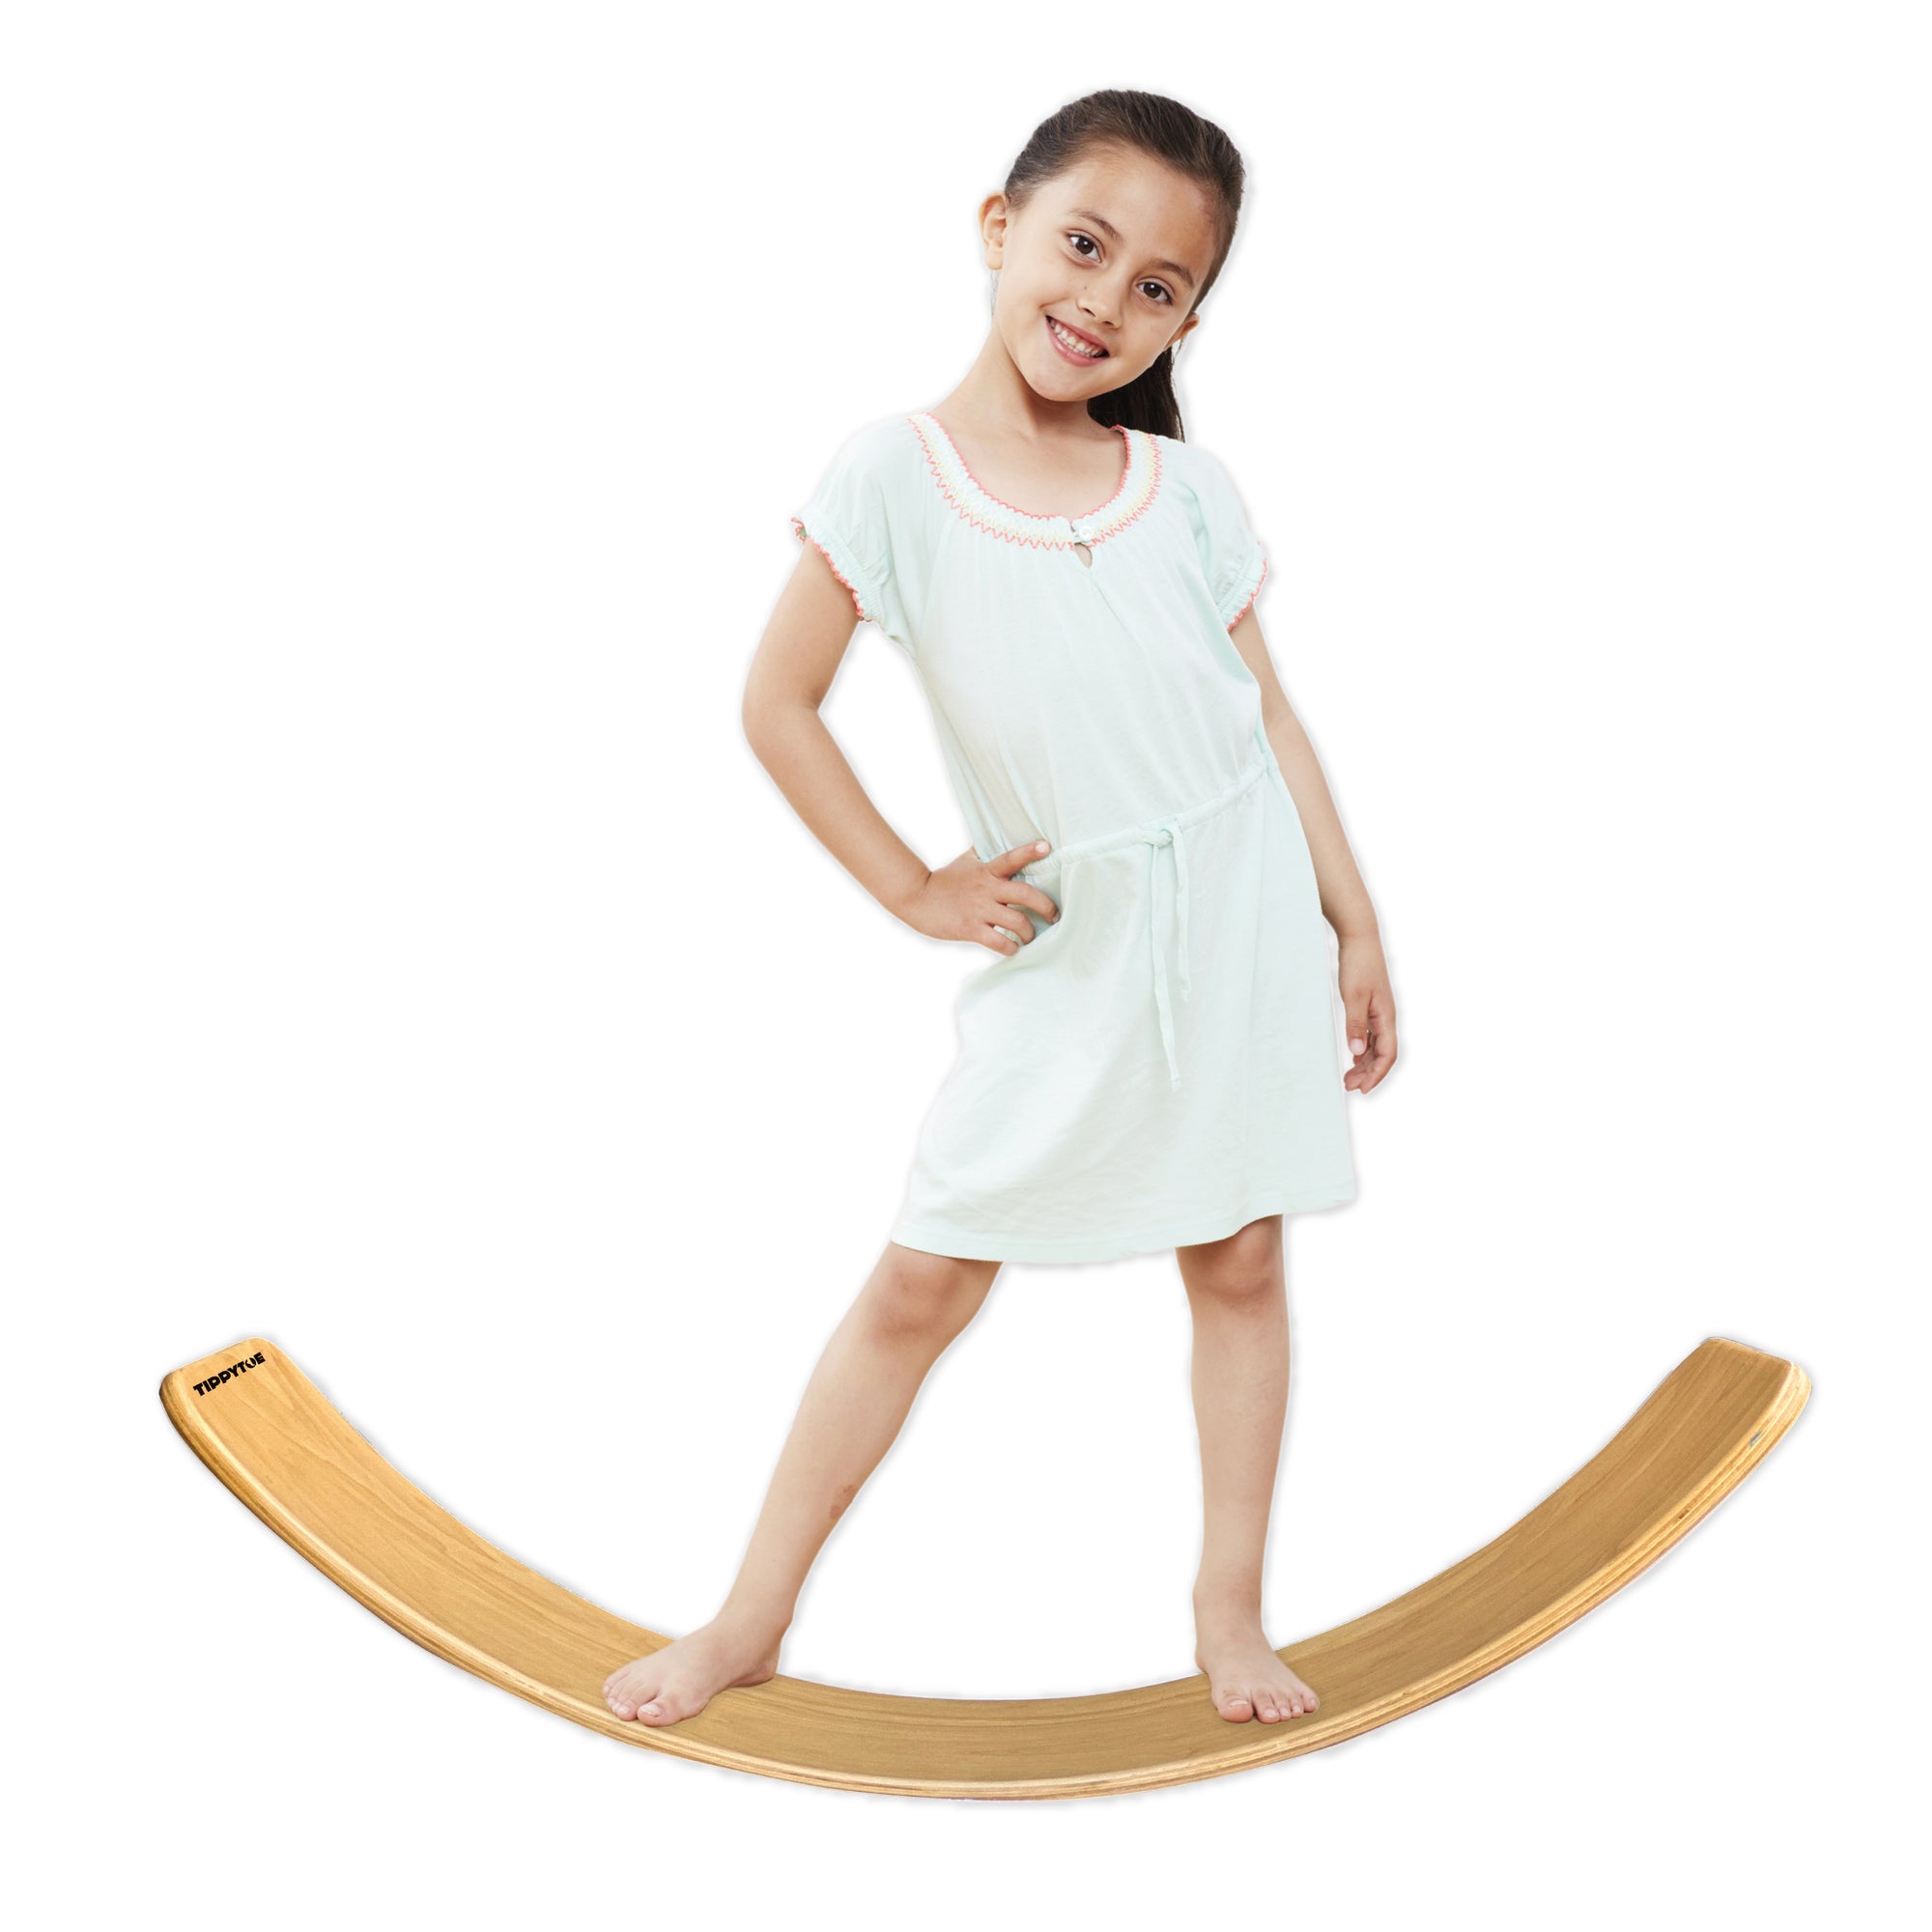 TippyToe Kids Balance Board Wooden Wobble Board, Toddler, Yoga Curvy Board,Rocker Board Natural Wood for Kids,Adults - shoekid.ca